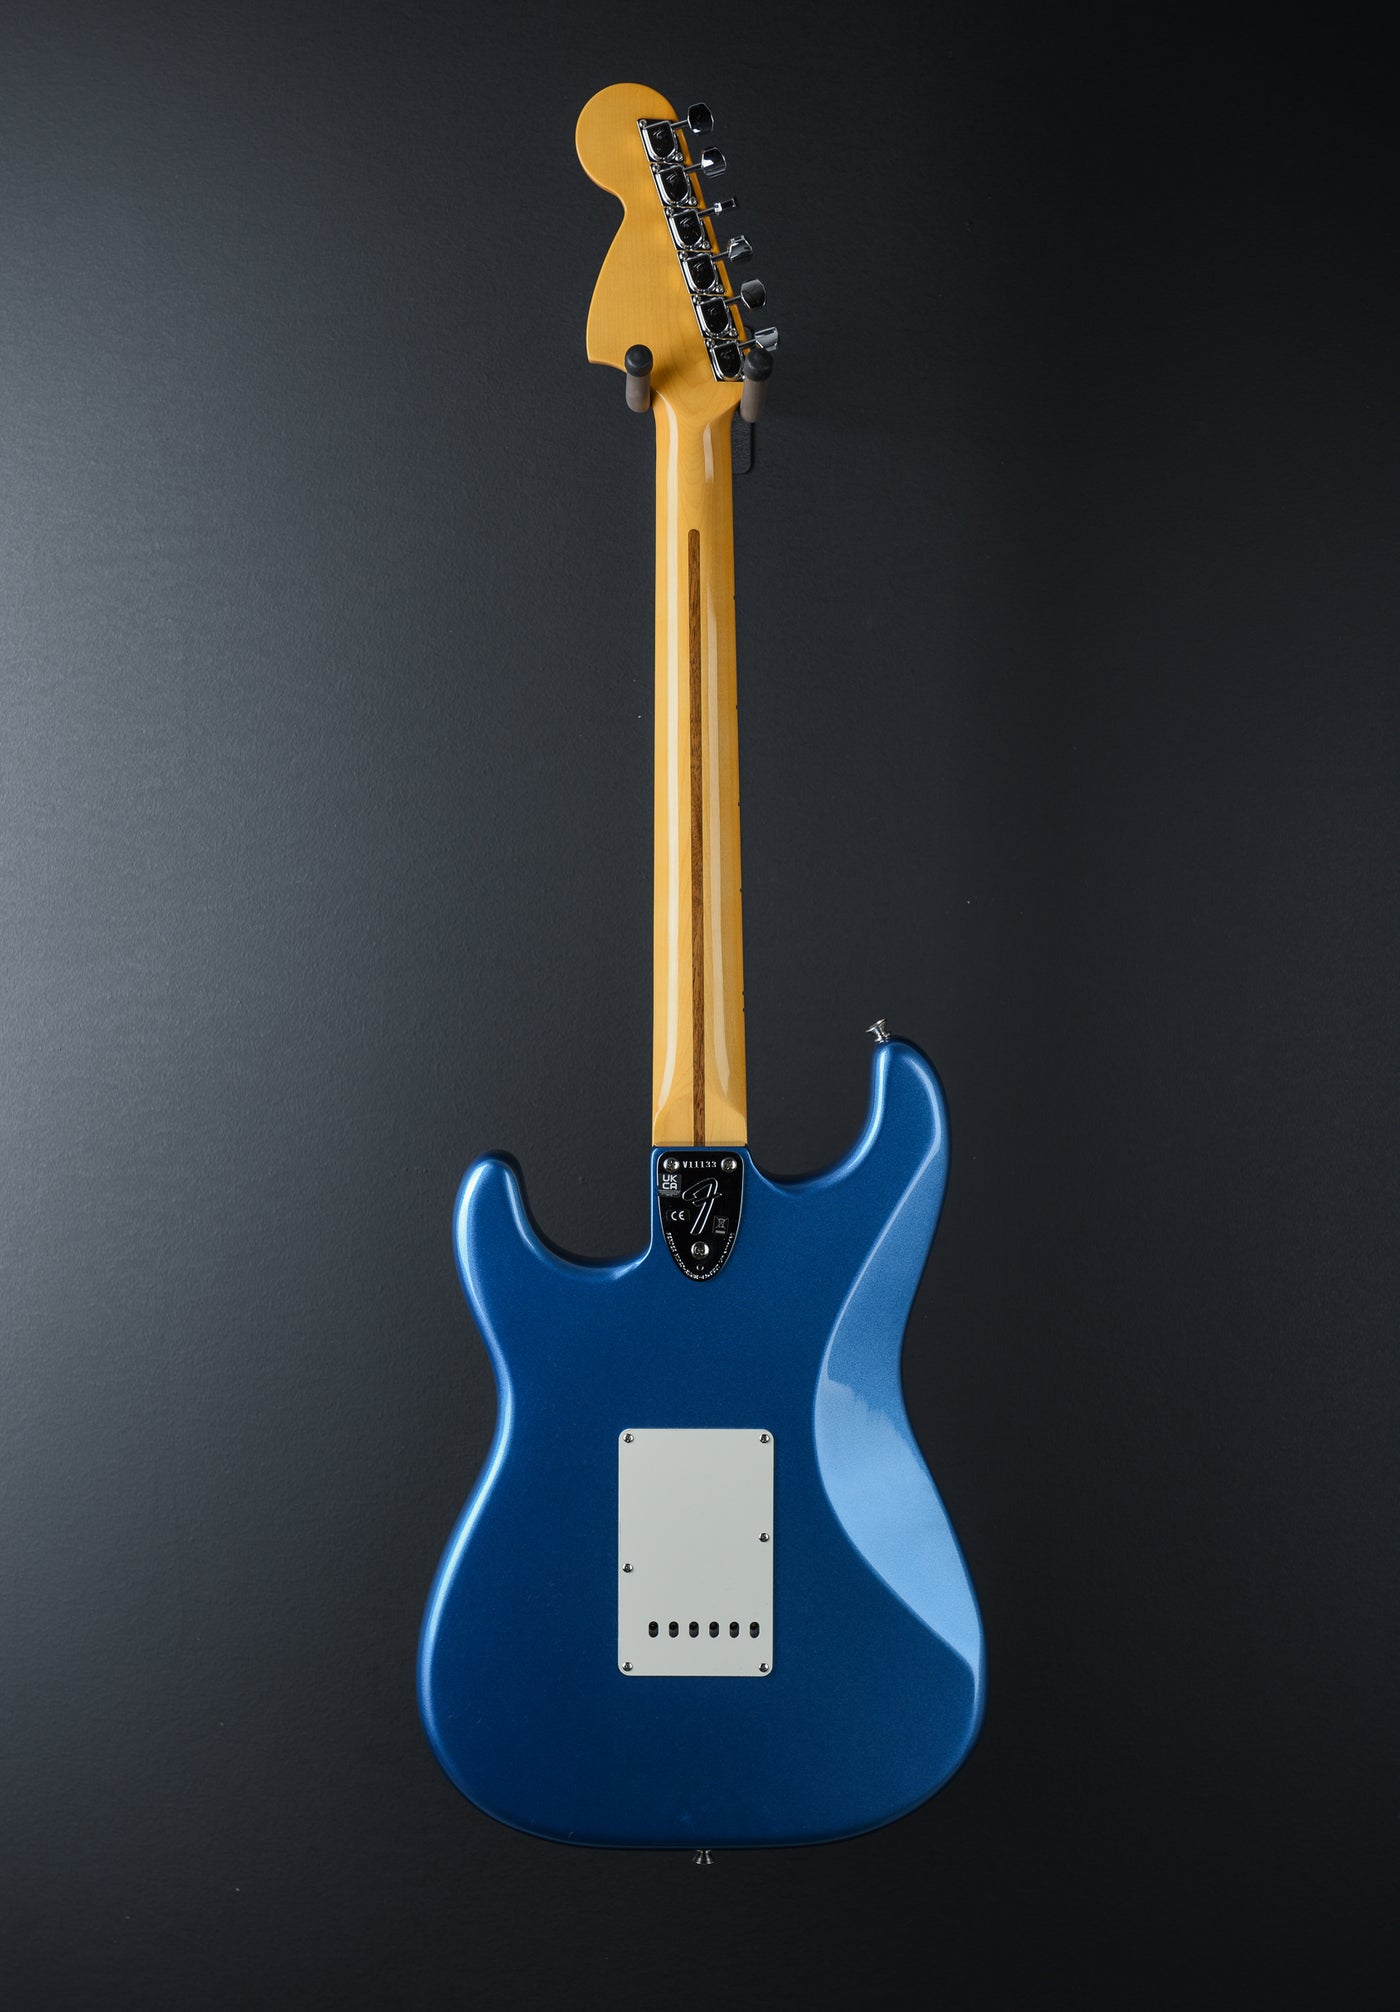 American Vintage II 1973 Stratocaster - Lake Placid Blue w/Maple